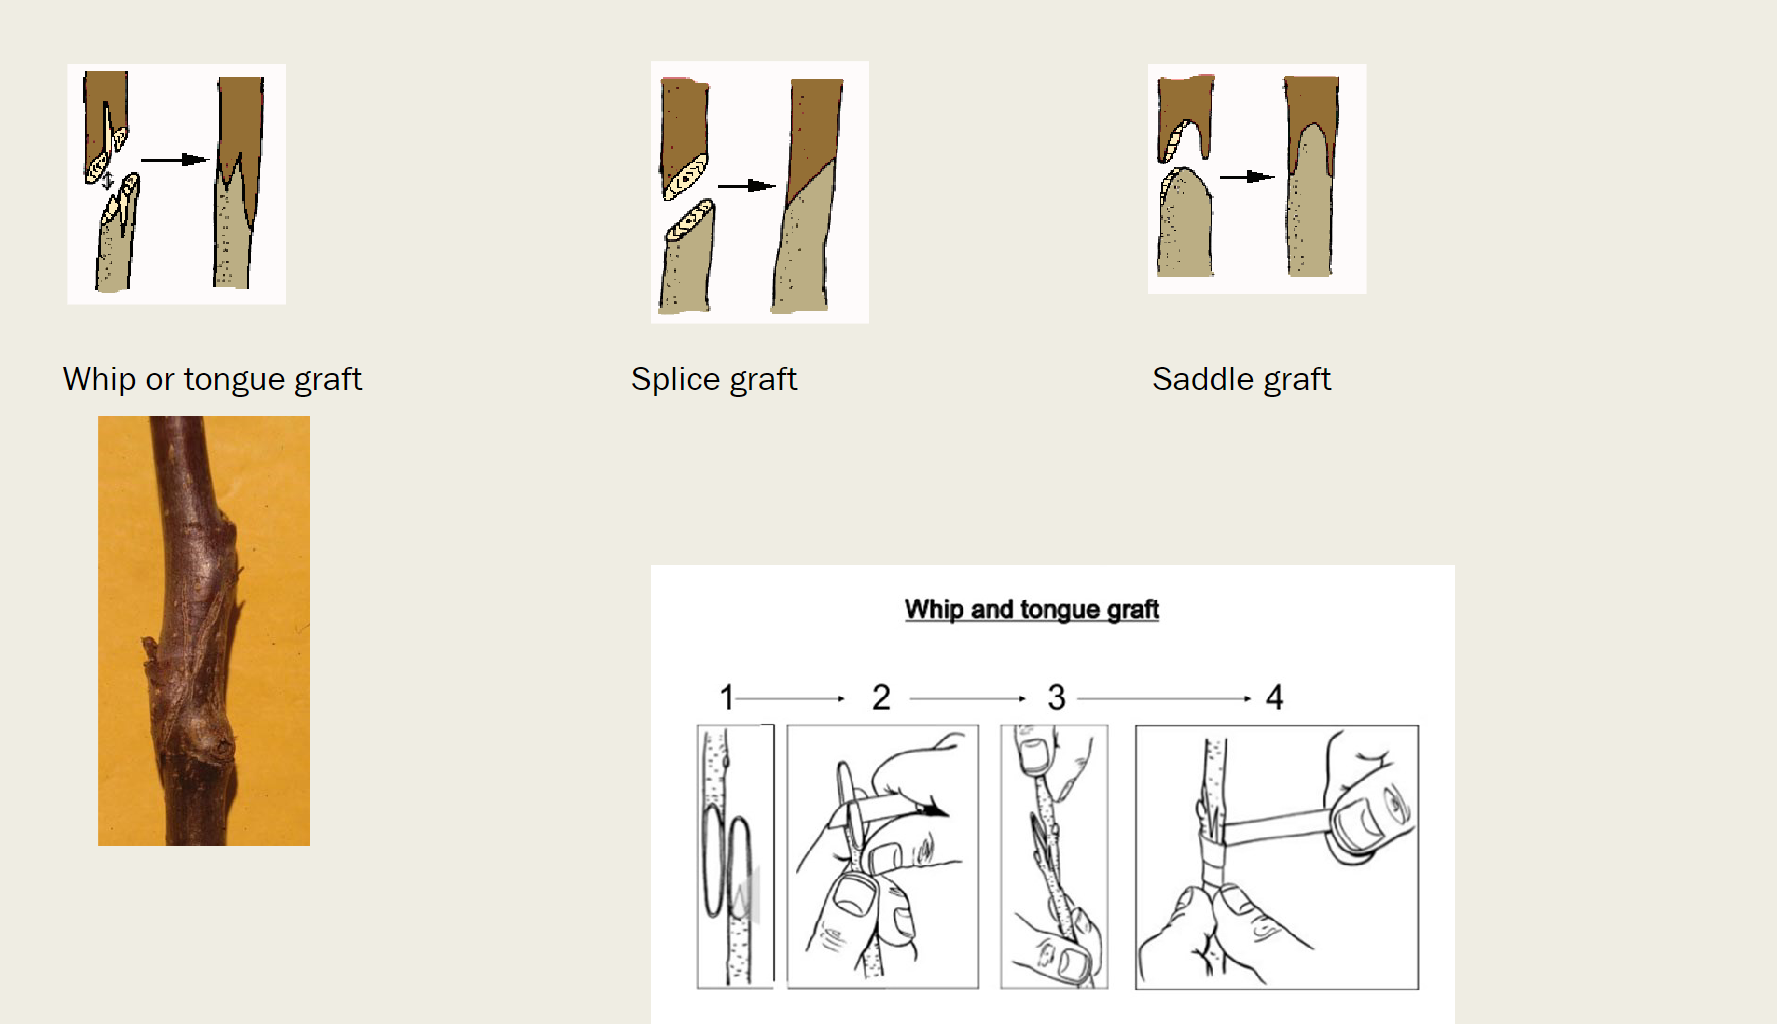 <p>whip or tongue graft, splice graft, and saddle graft</p>